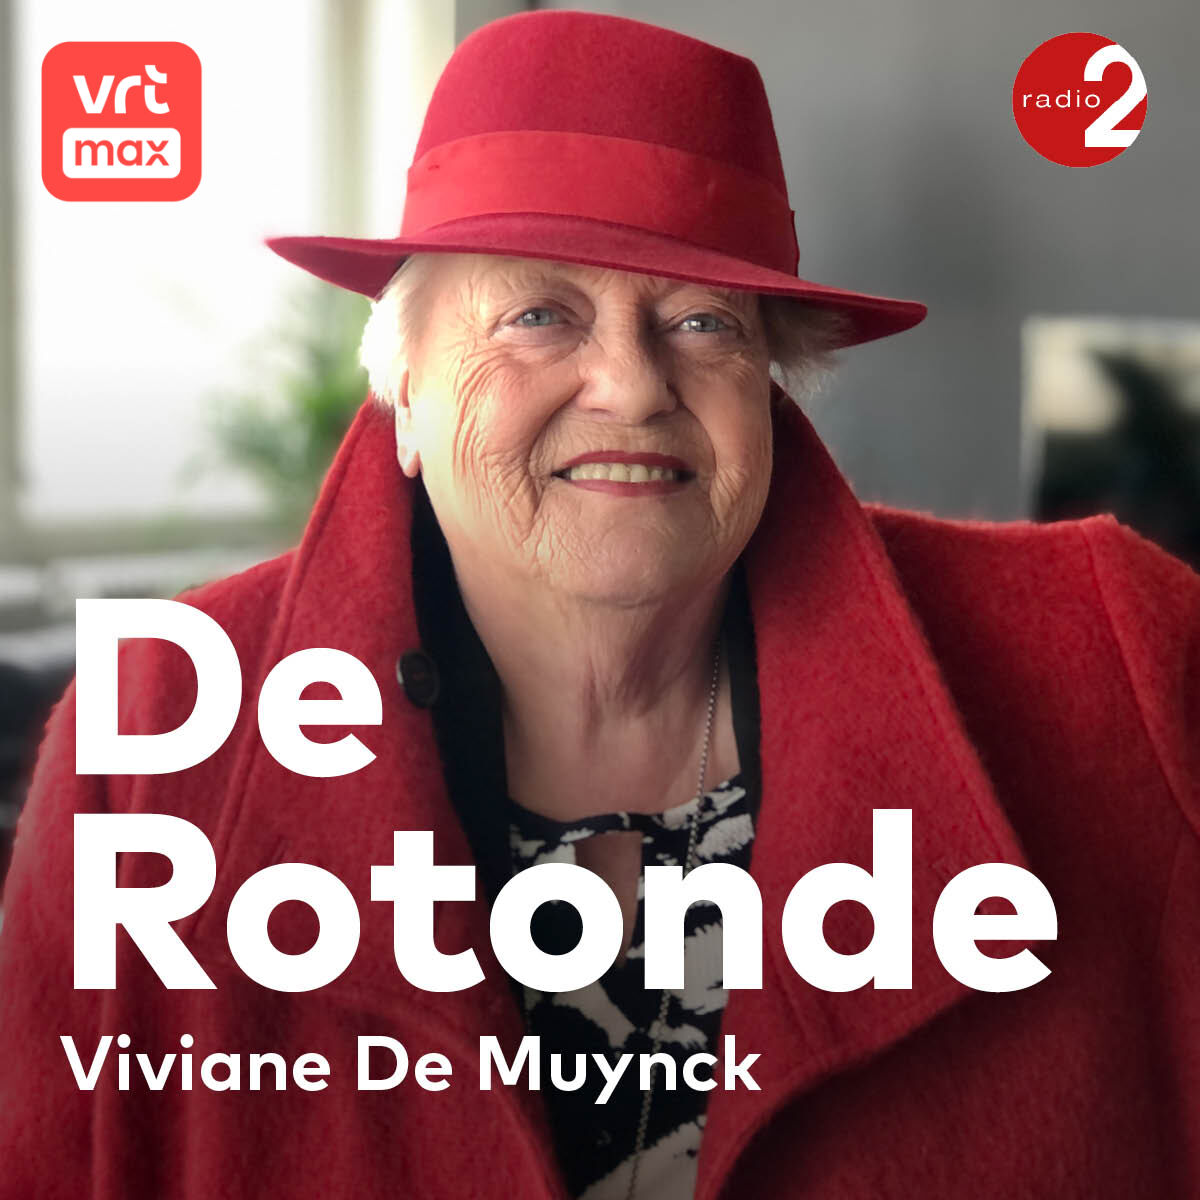 Viviane De Muynck